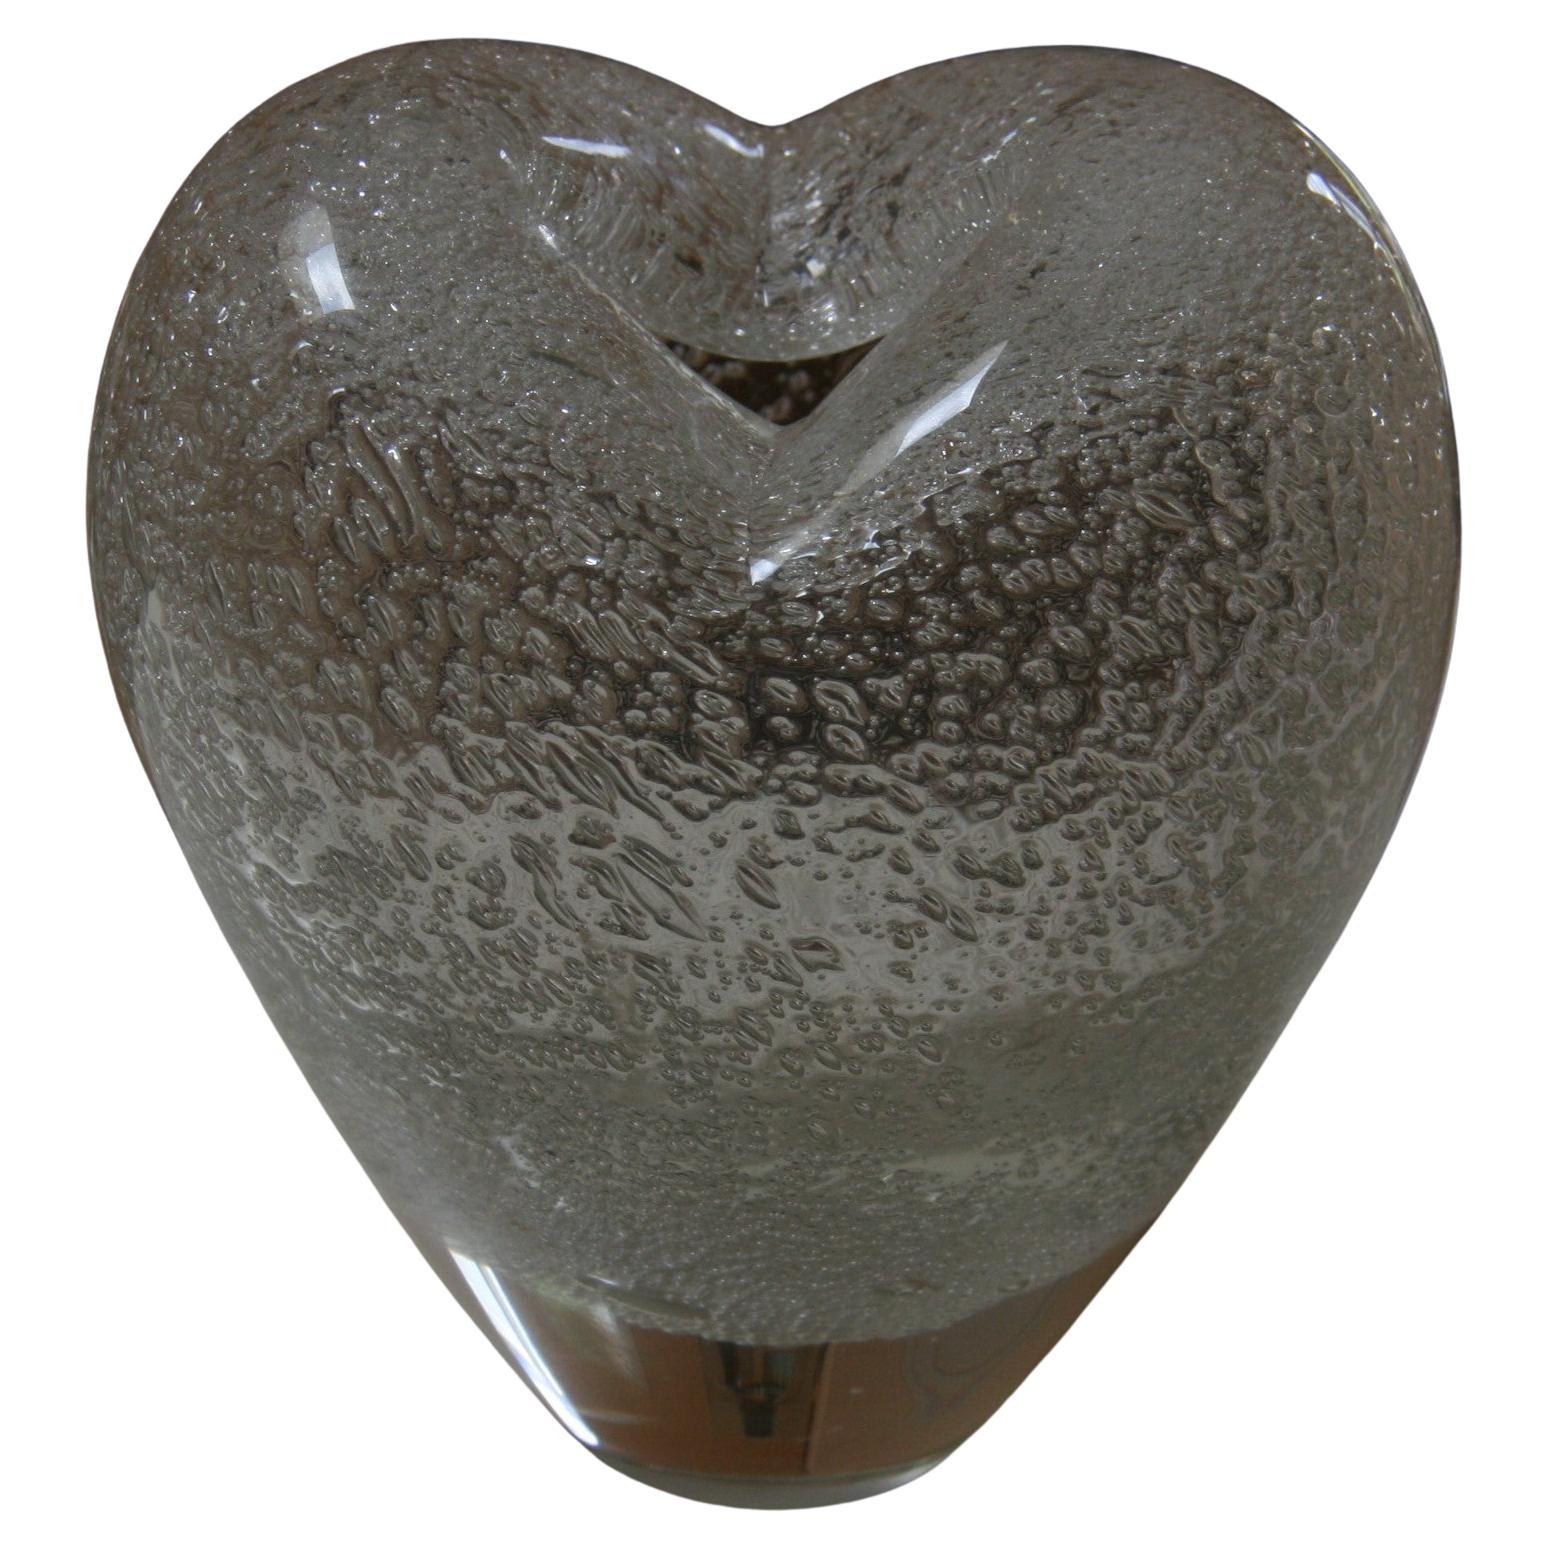  Seguso Murano Heart Shaped Vase/Sculpture